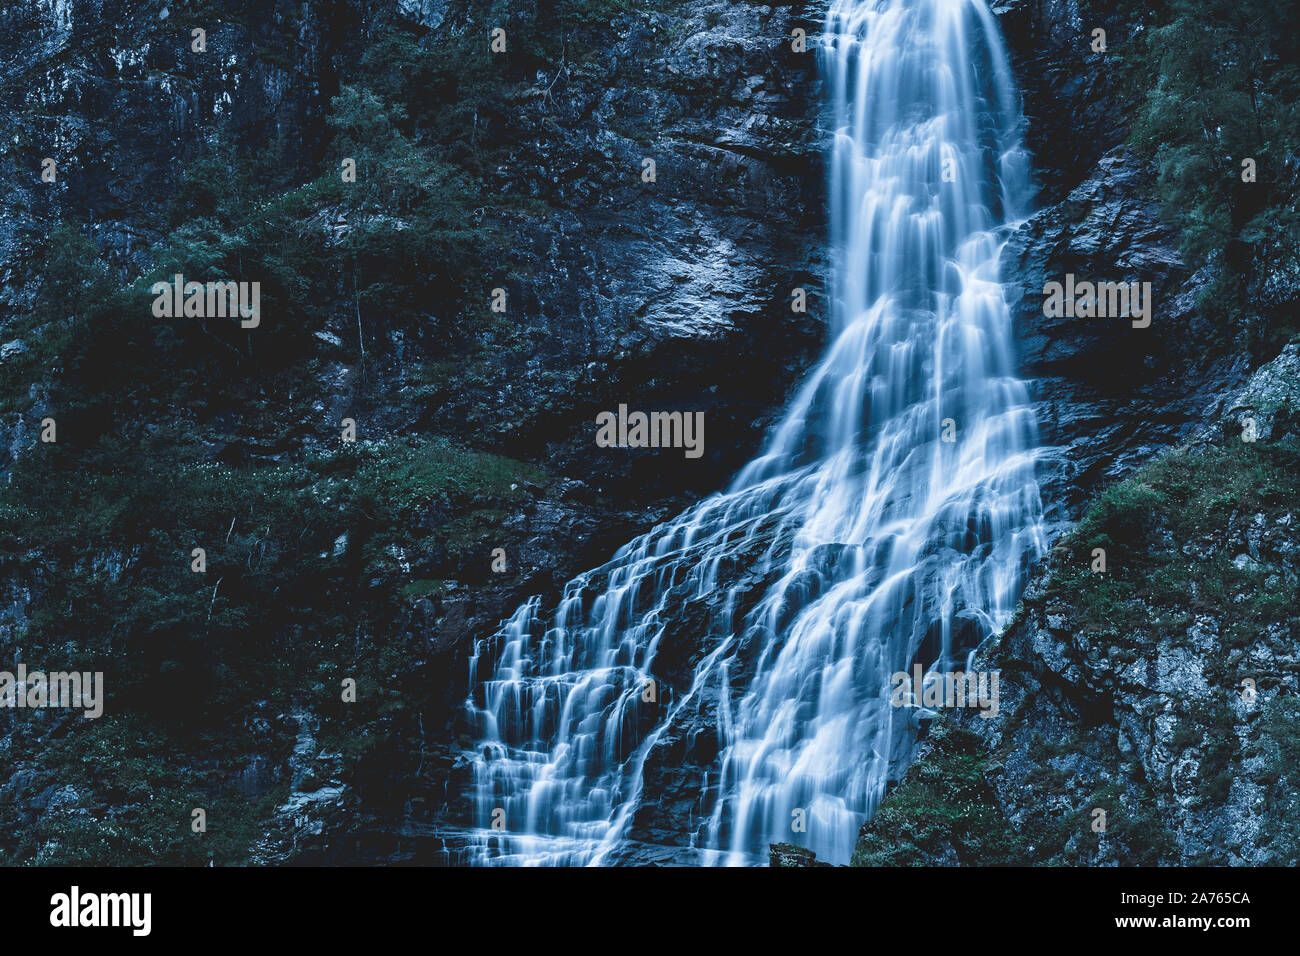 Glühende Wasserfall An einem felsigen Berghang in Grün bewachsen Stockfoto